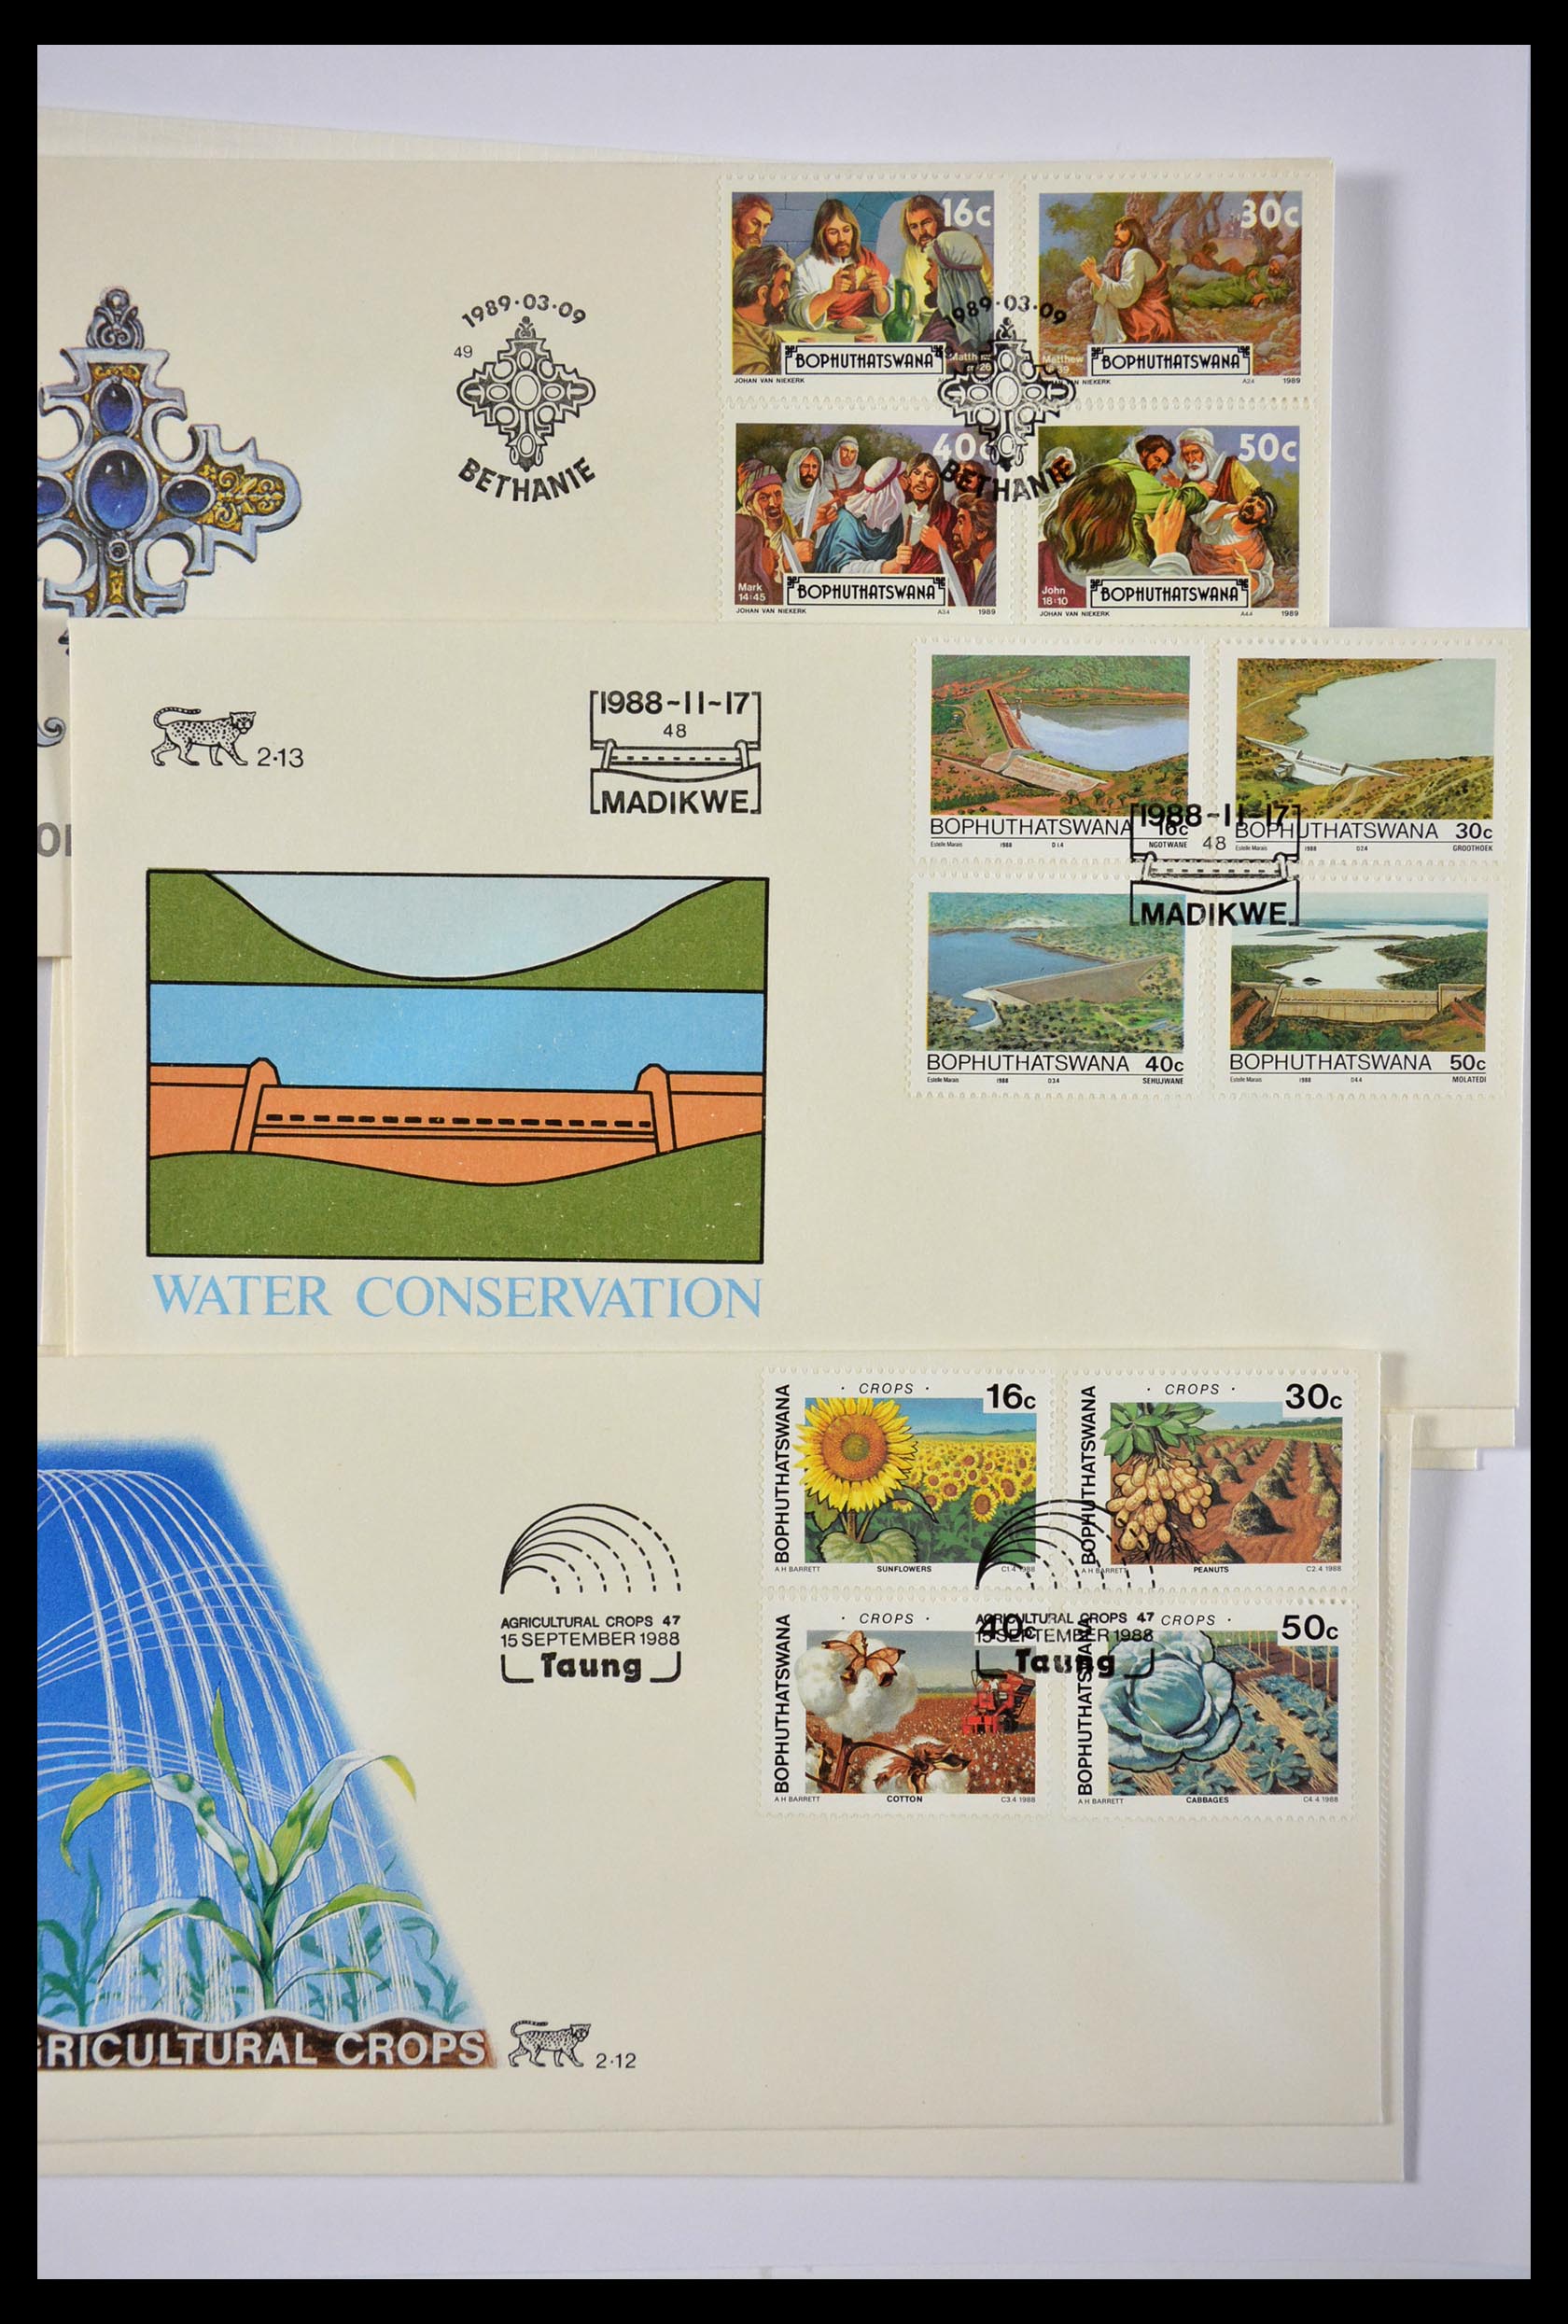 29356 486 - 29356 Zuid Afrika thuislanden fdc's 1979-1991.